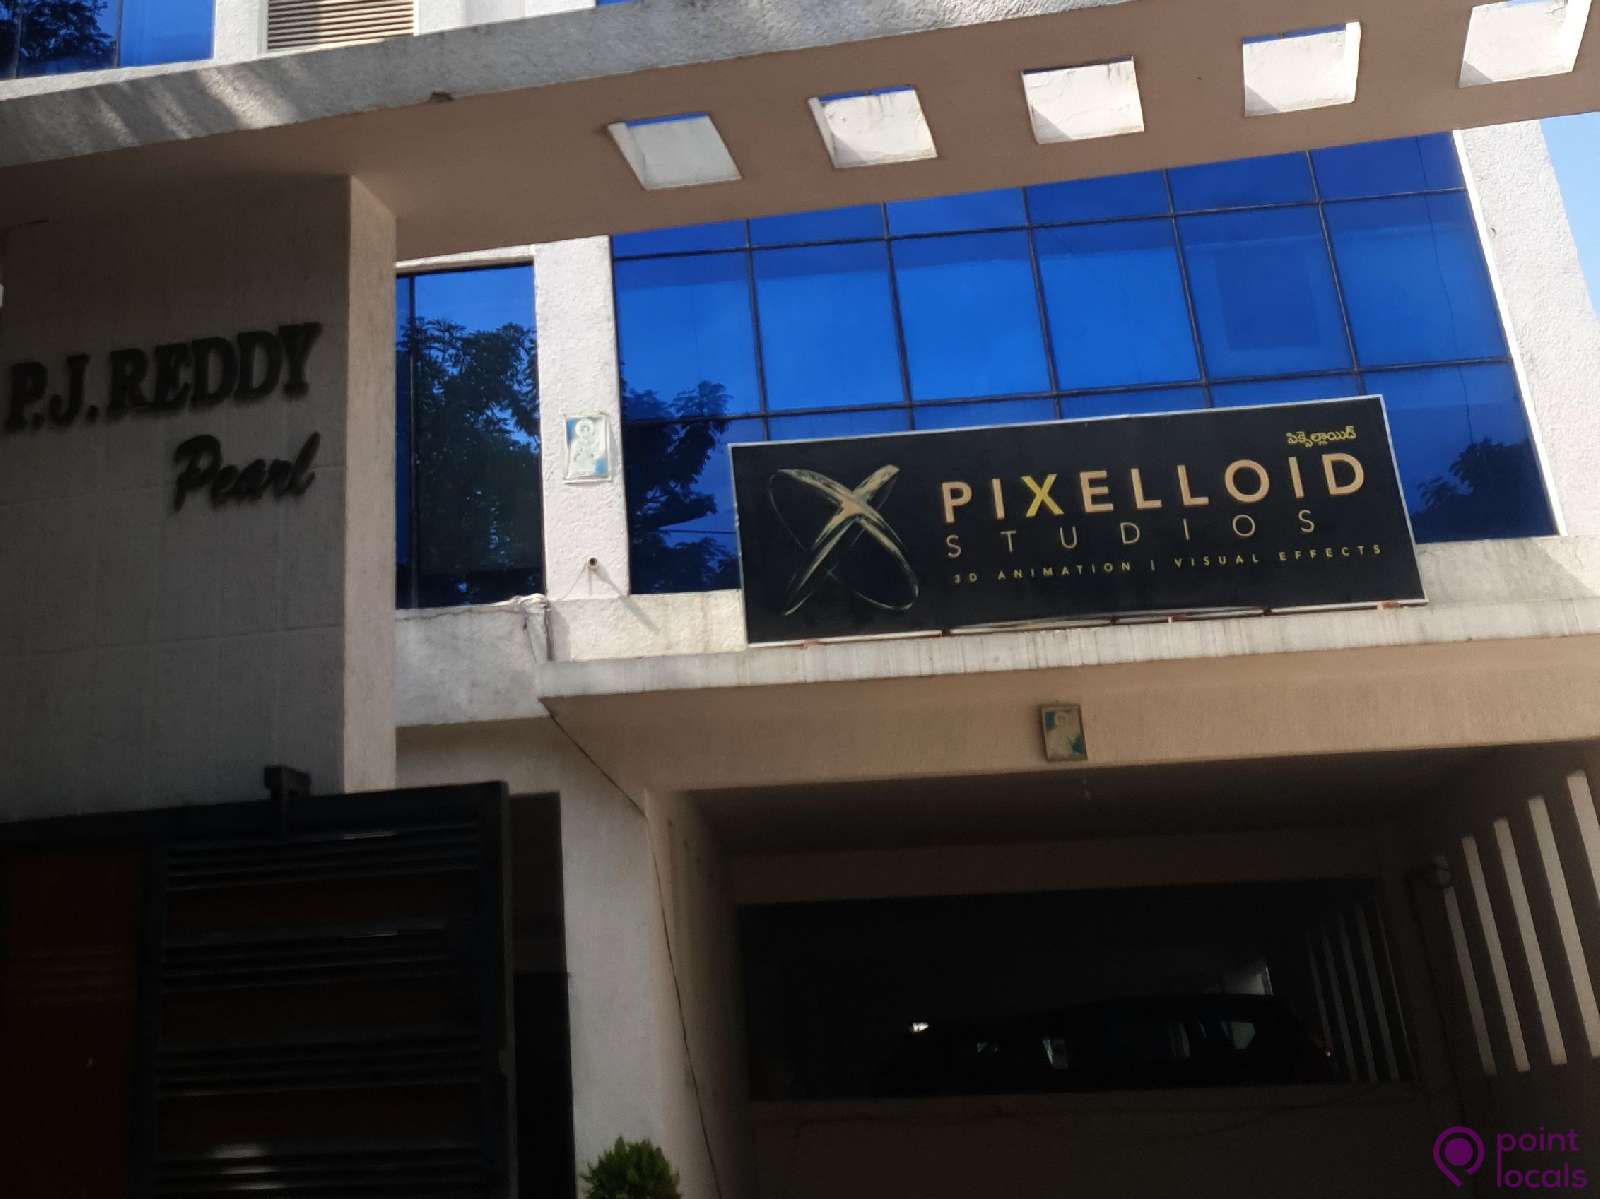 Pixelloid Studios - Animation Institution in Hyderabad,Telangana |  Pointlocals